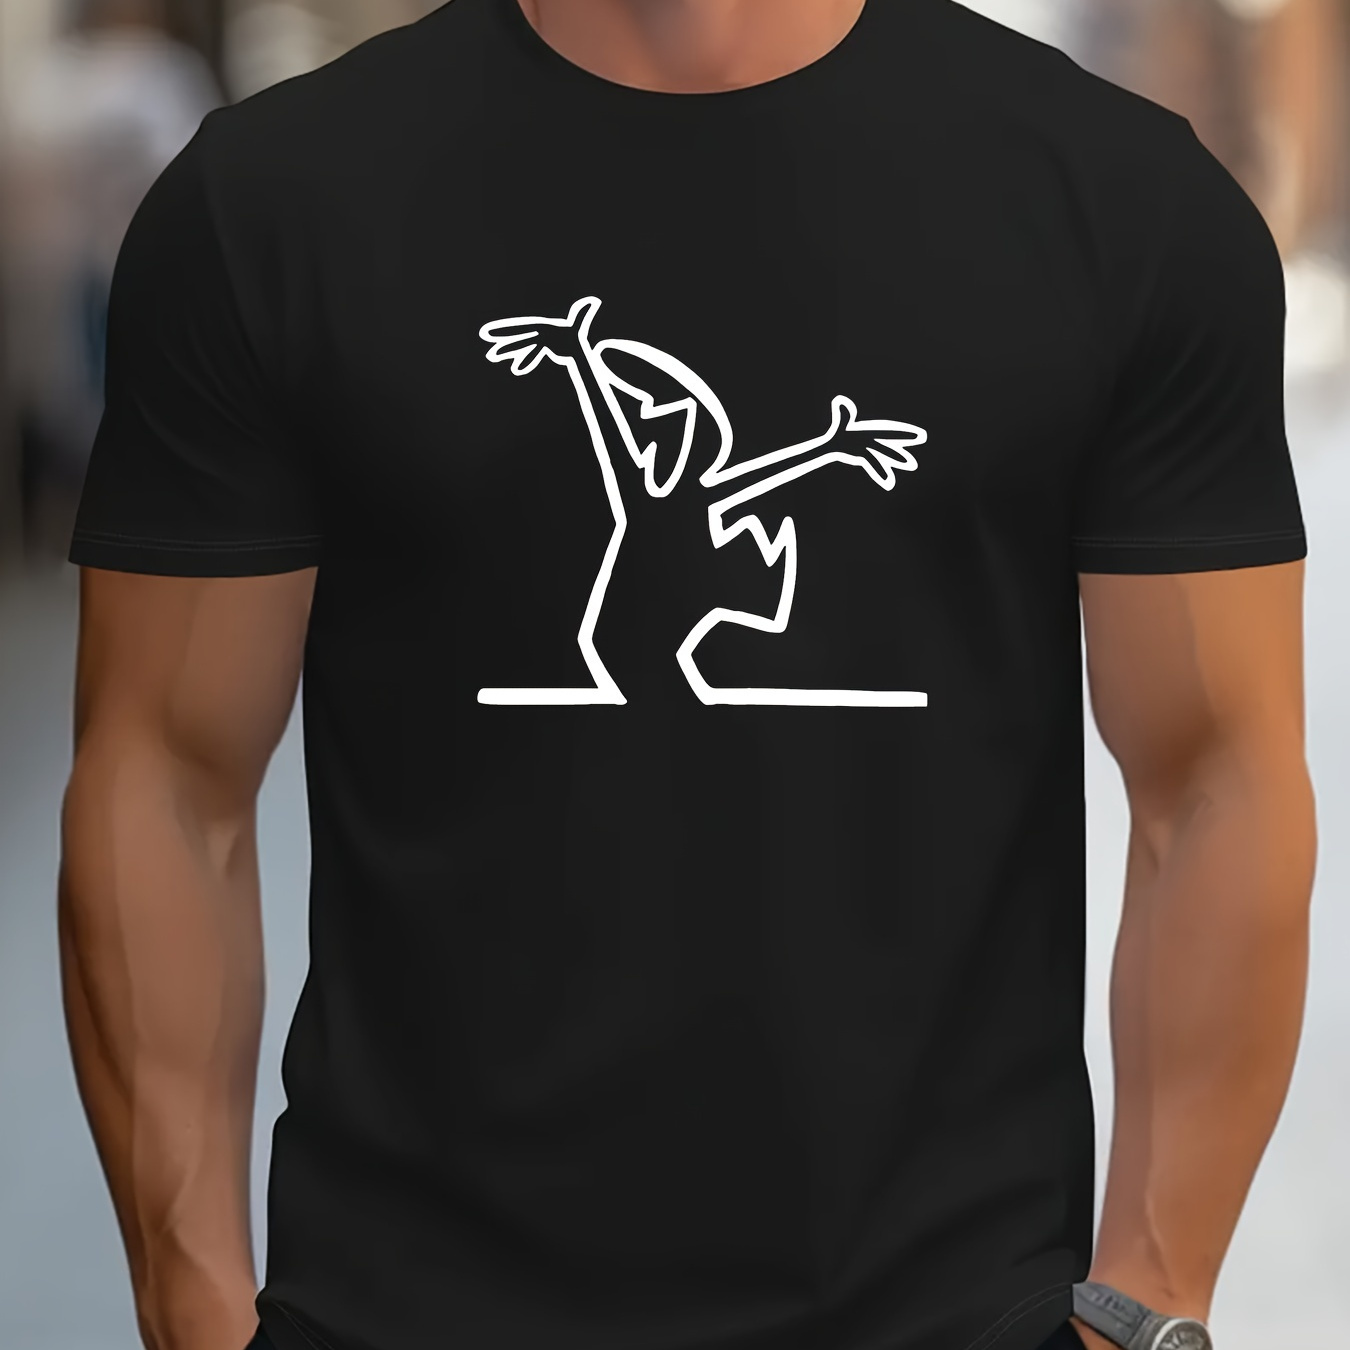 

Men's Casual Versatile Summer T-shirt - Dancing Figure Silhouette Pattern Short Sleeve Crew Neck Comfy Tees As Gift